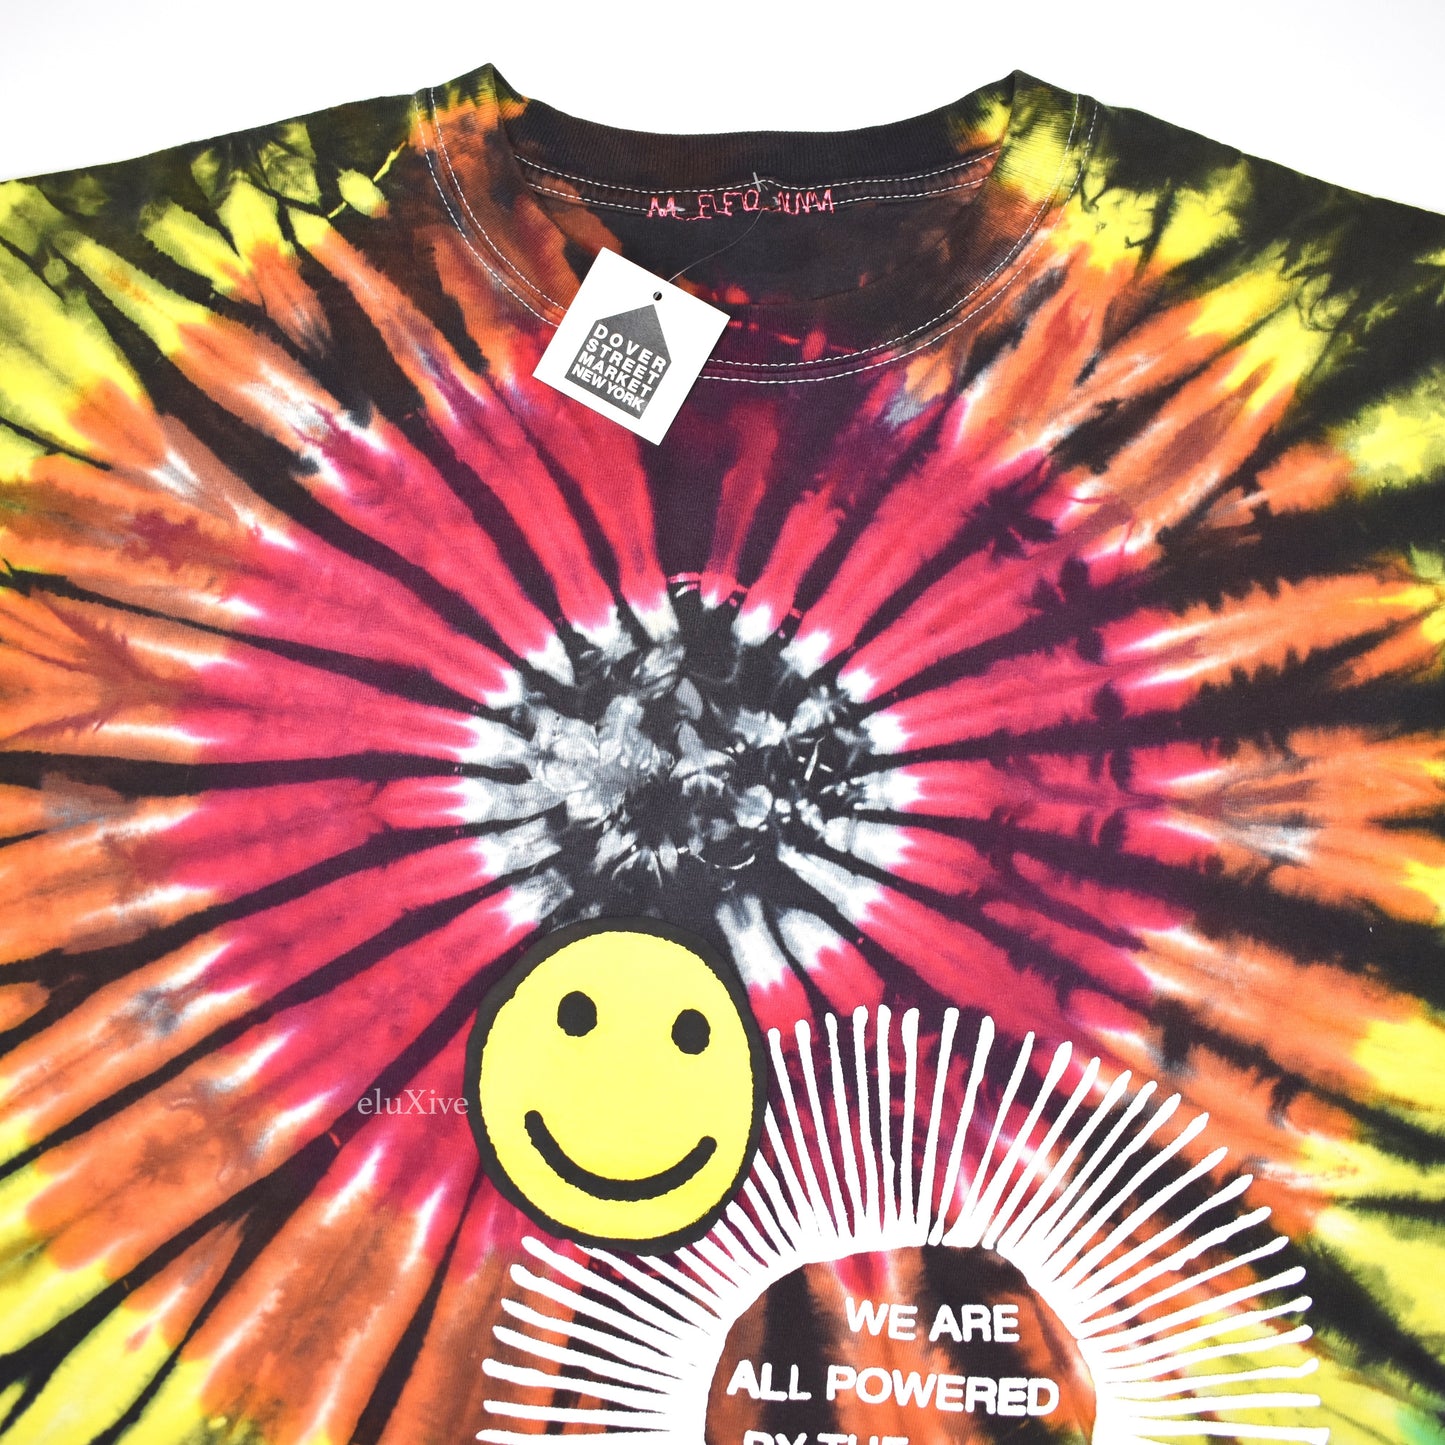 Cactus Plant Flea Market - Tie-Dye Smiley Logo T-Shirt